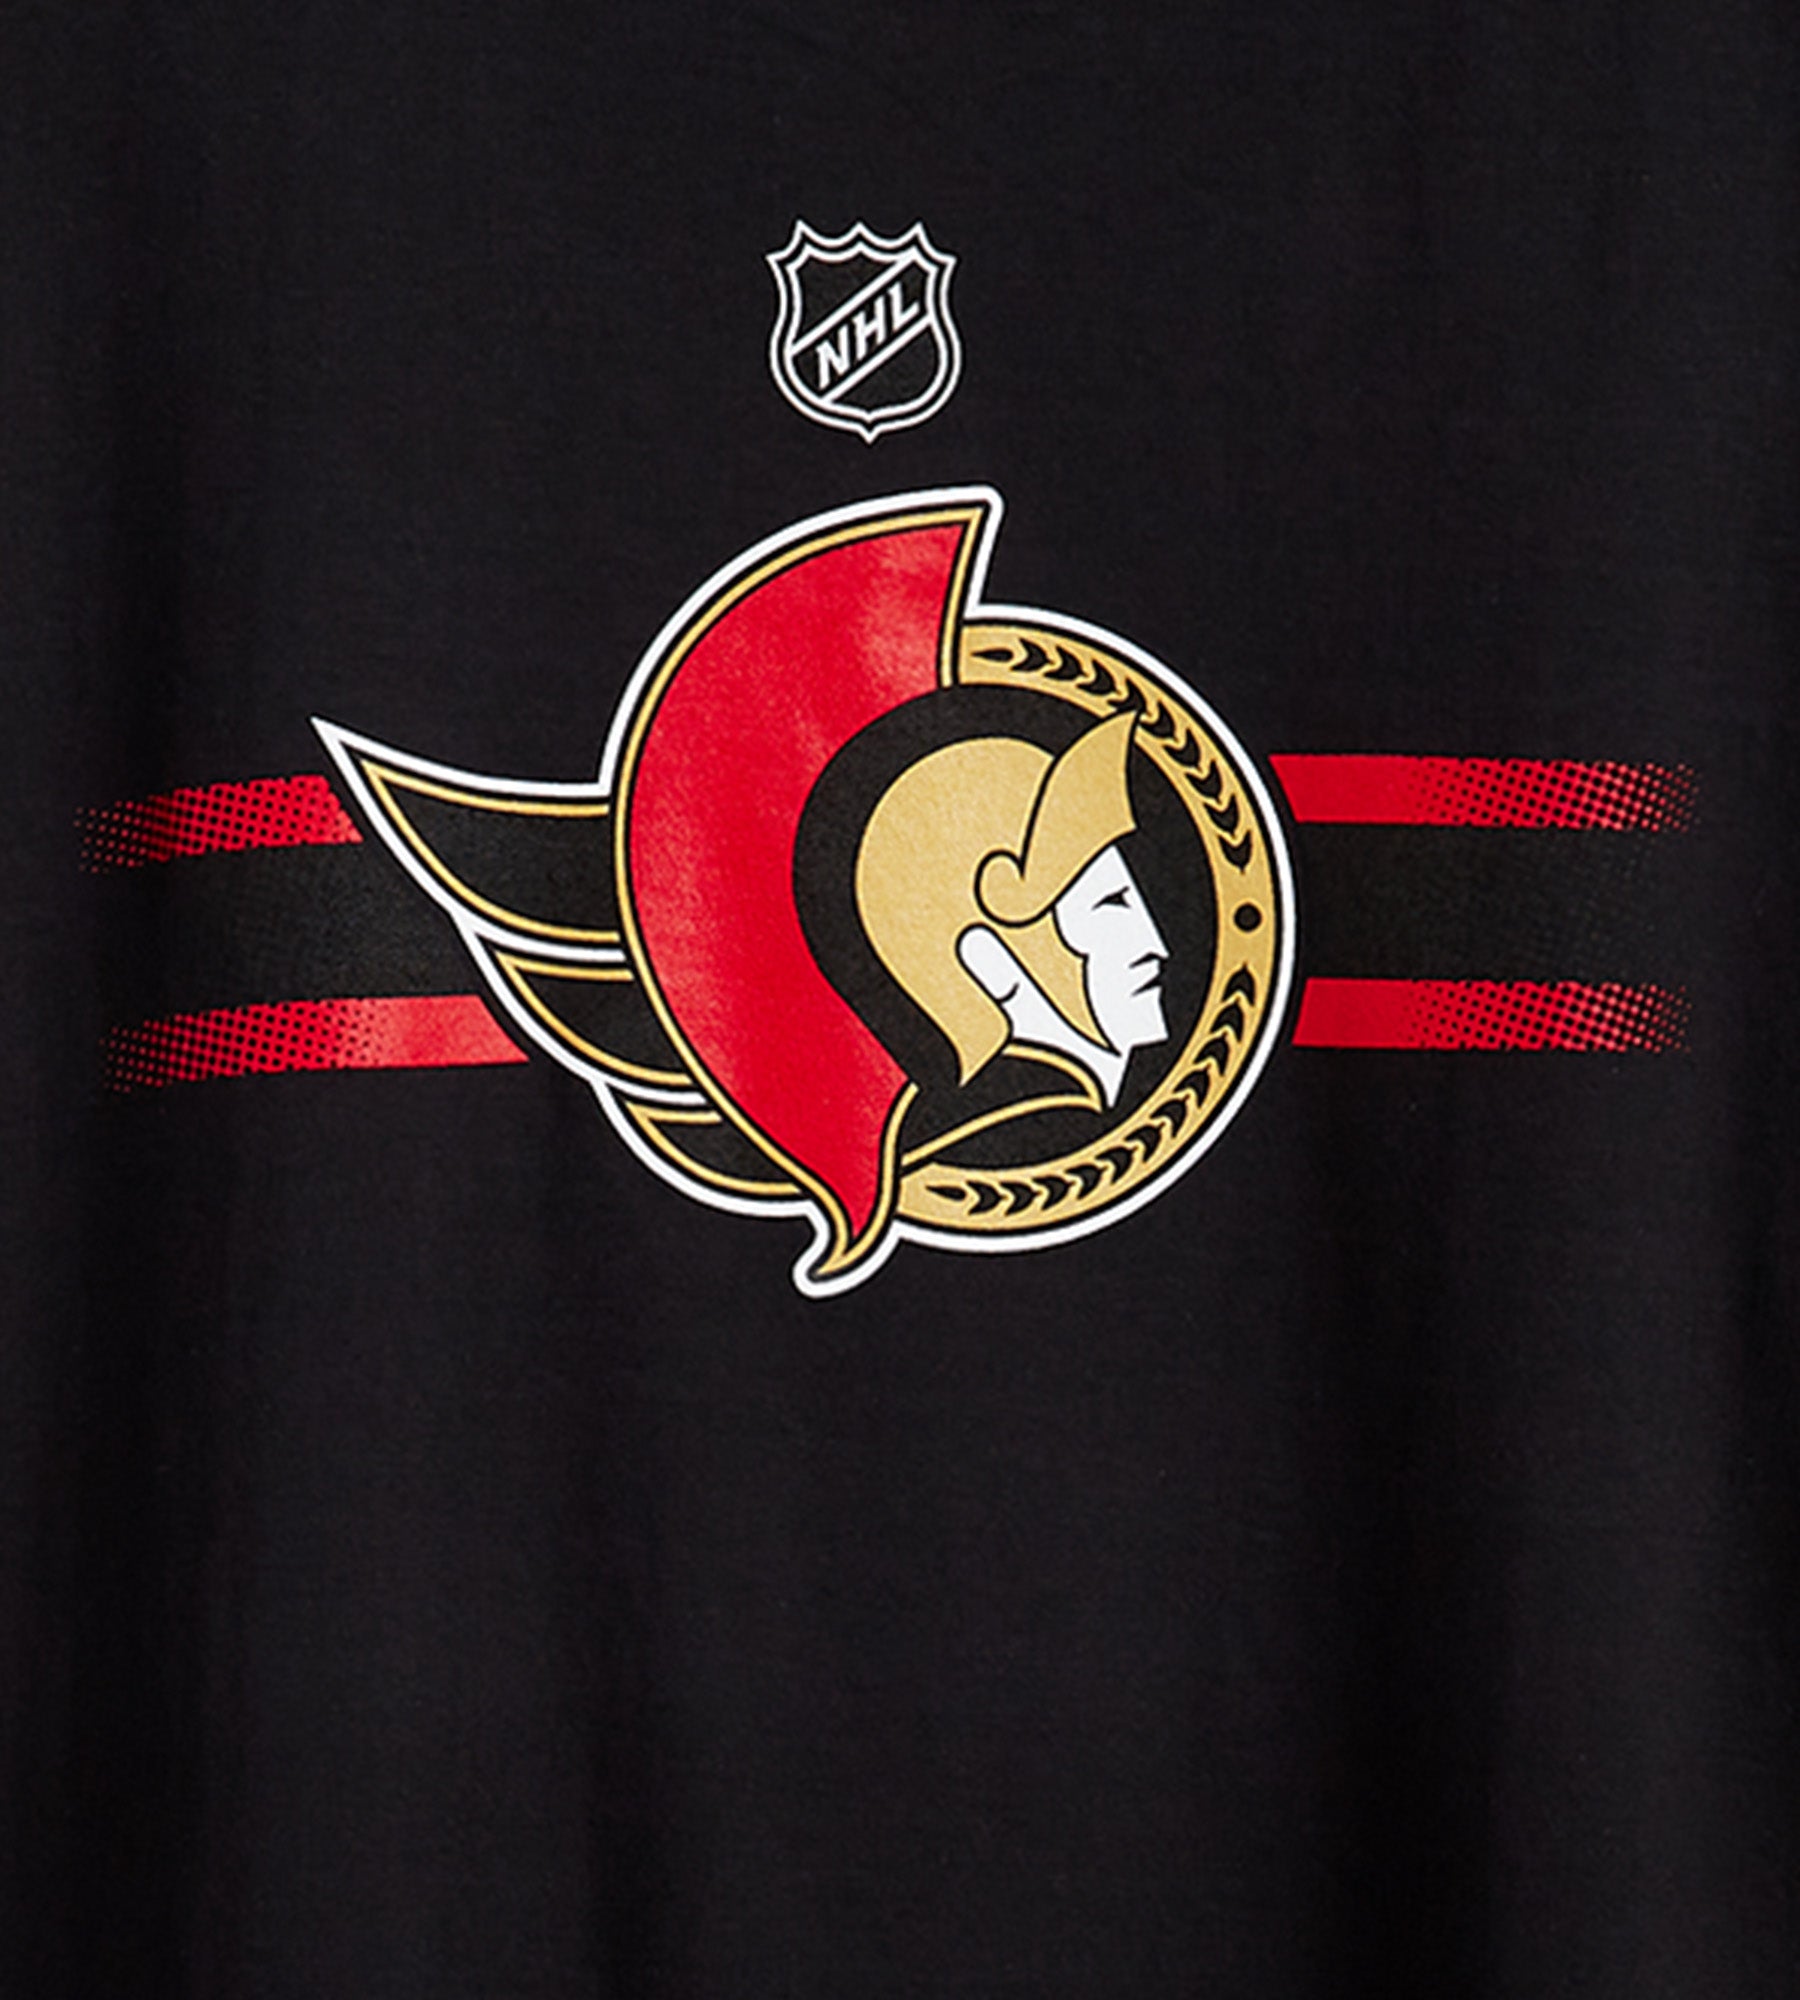 Ottawa Senators NHL Graphic Tee